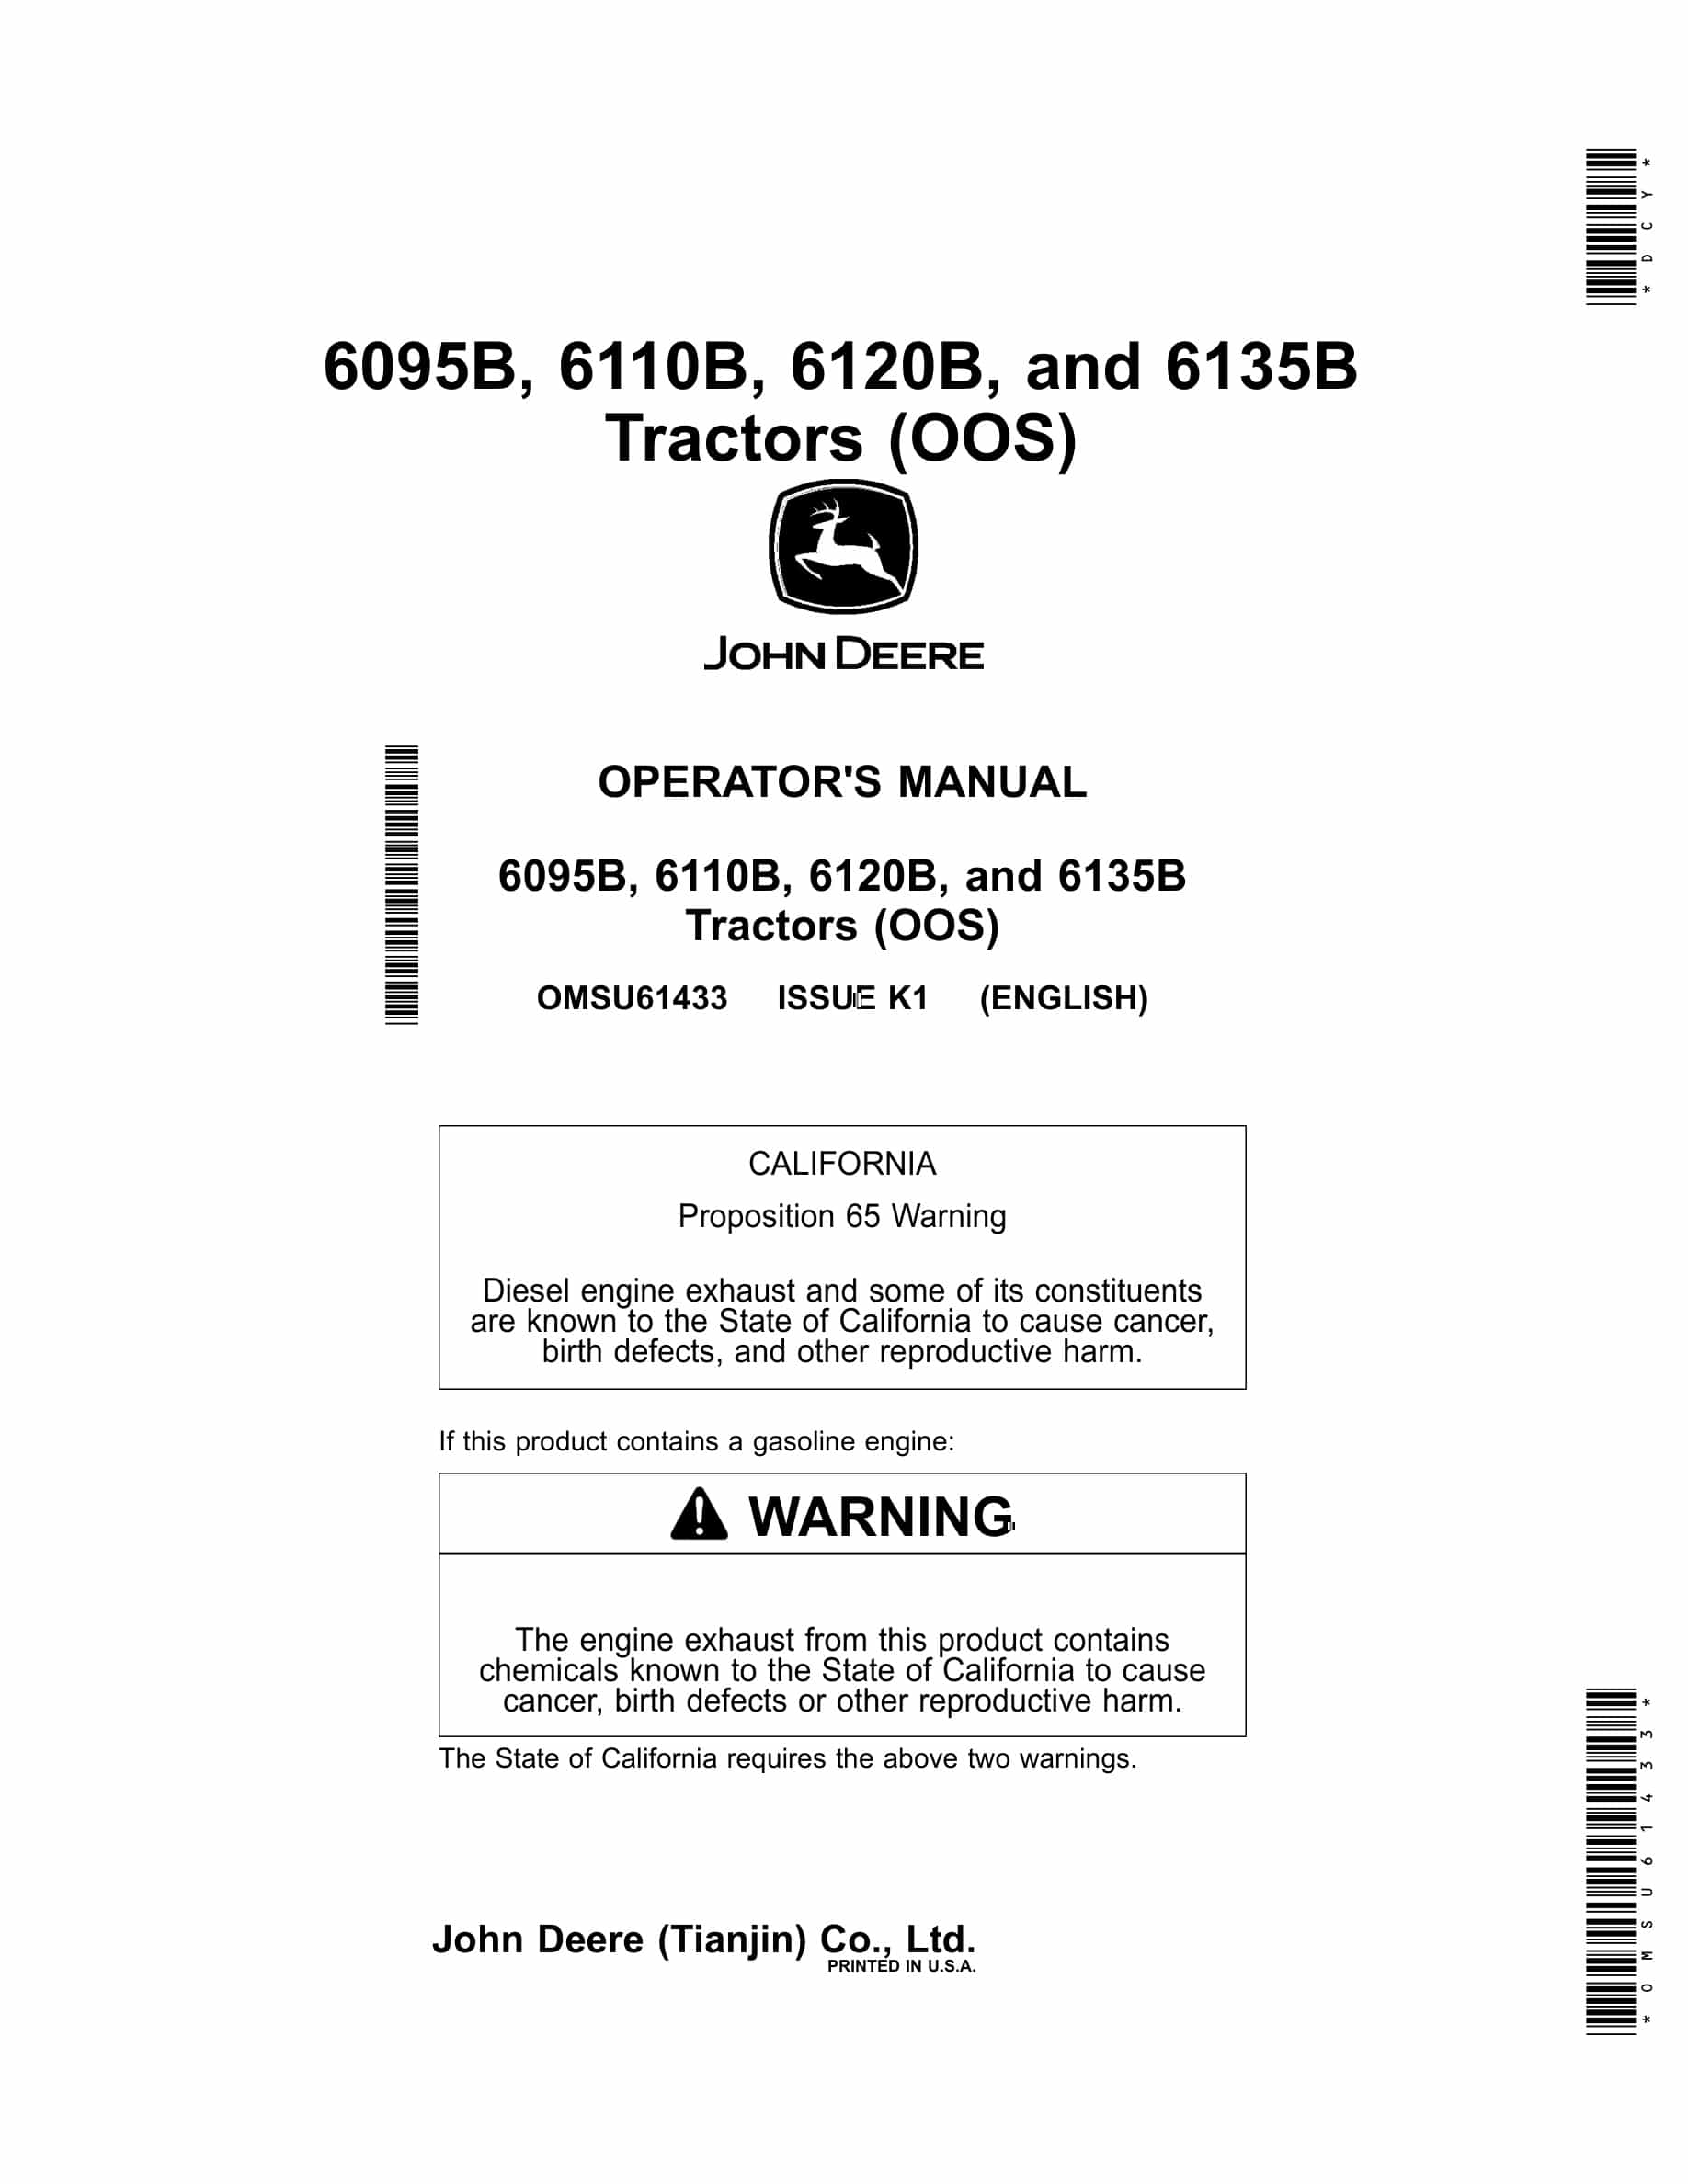 John Deere 6095b, 6110b, 6120b, And 6135b Tractors Operator Manuals OMSU61433-1